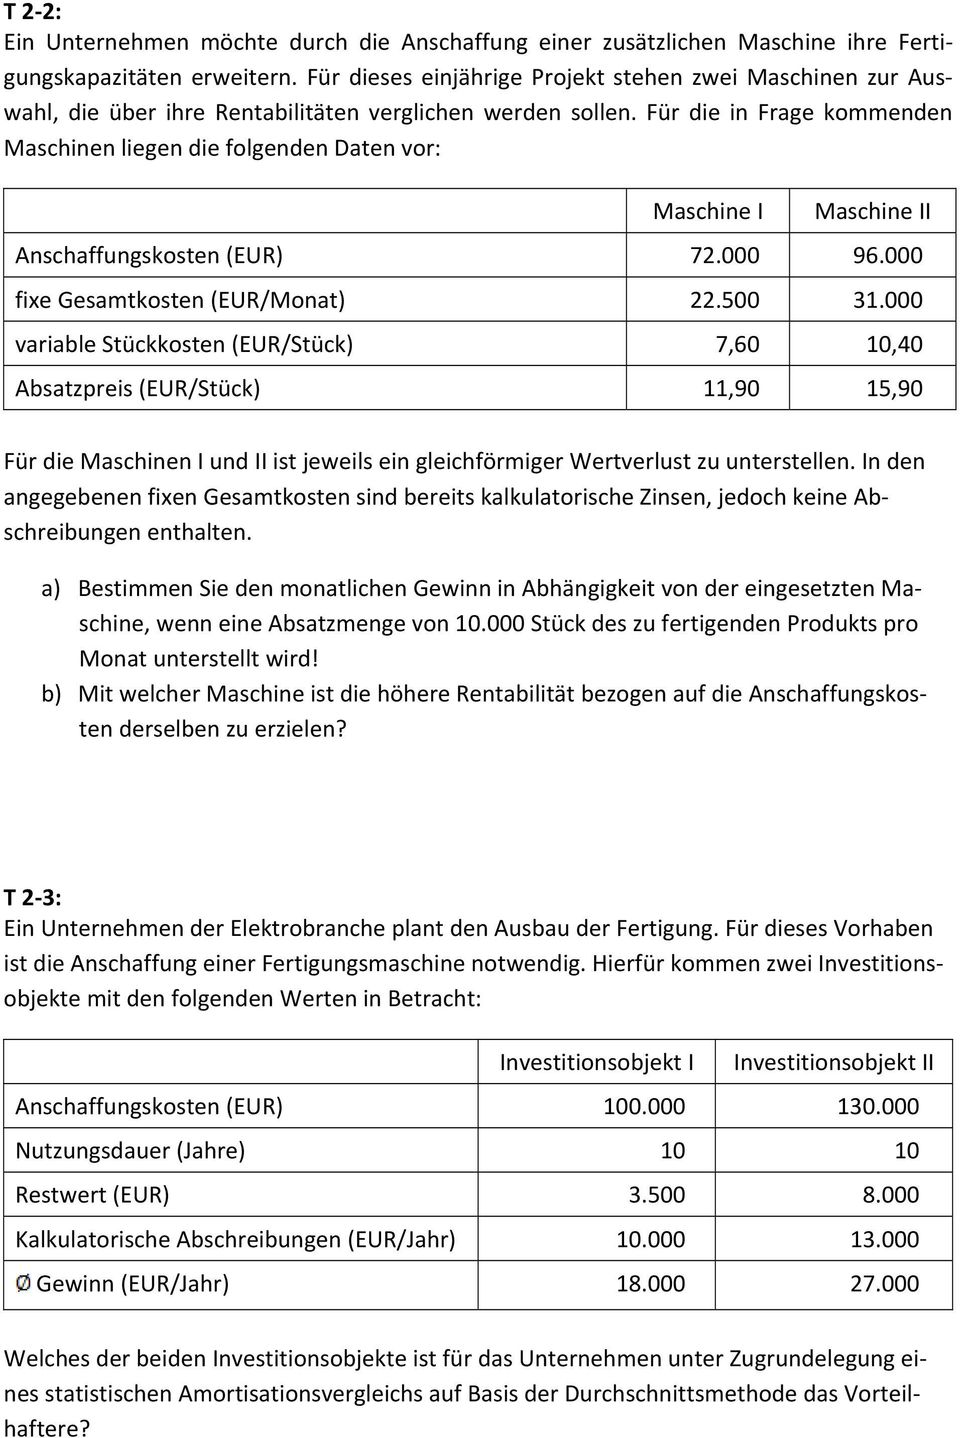 varable Sückkose (EUR/Sück) 7,6,4 Absazpres (EUR/Sück),9 5,9 Für de Masche I ud II s jewels e glechförmger Werverlus zu uerselle.